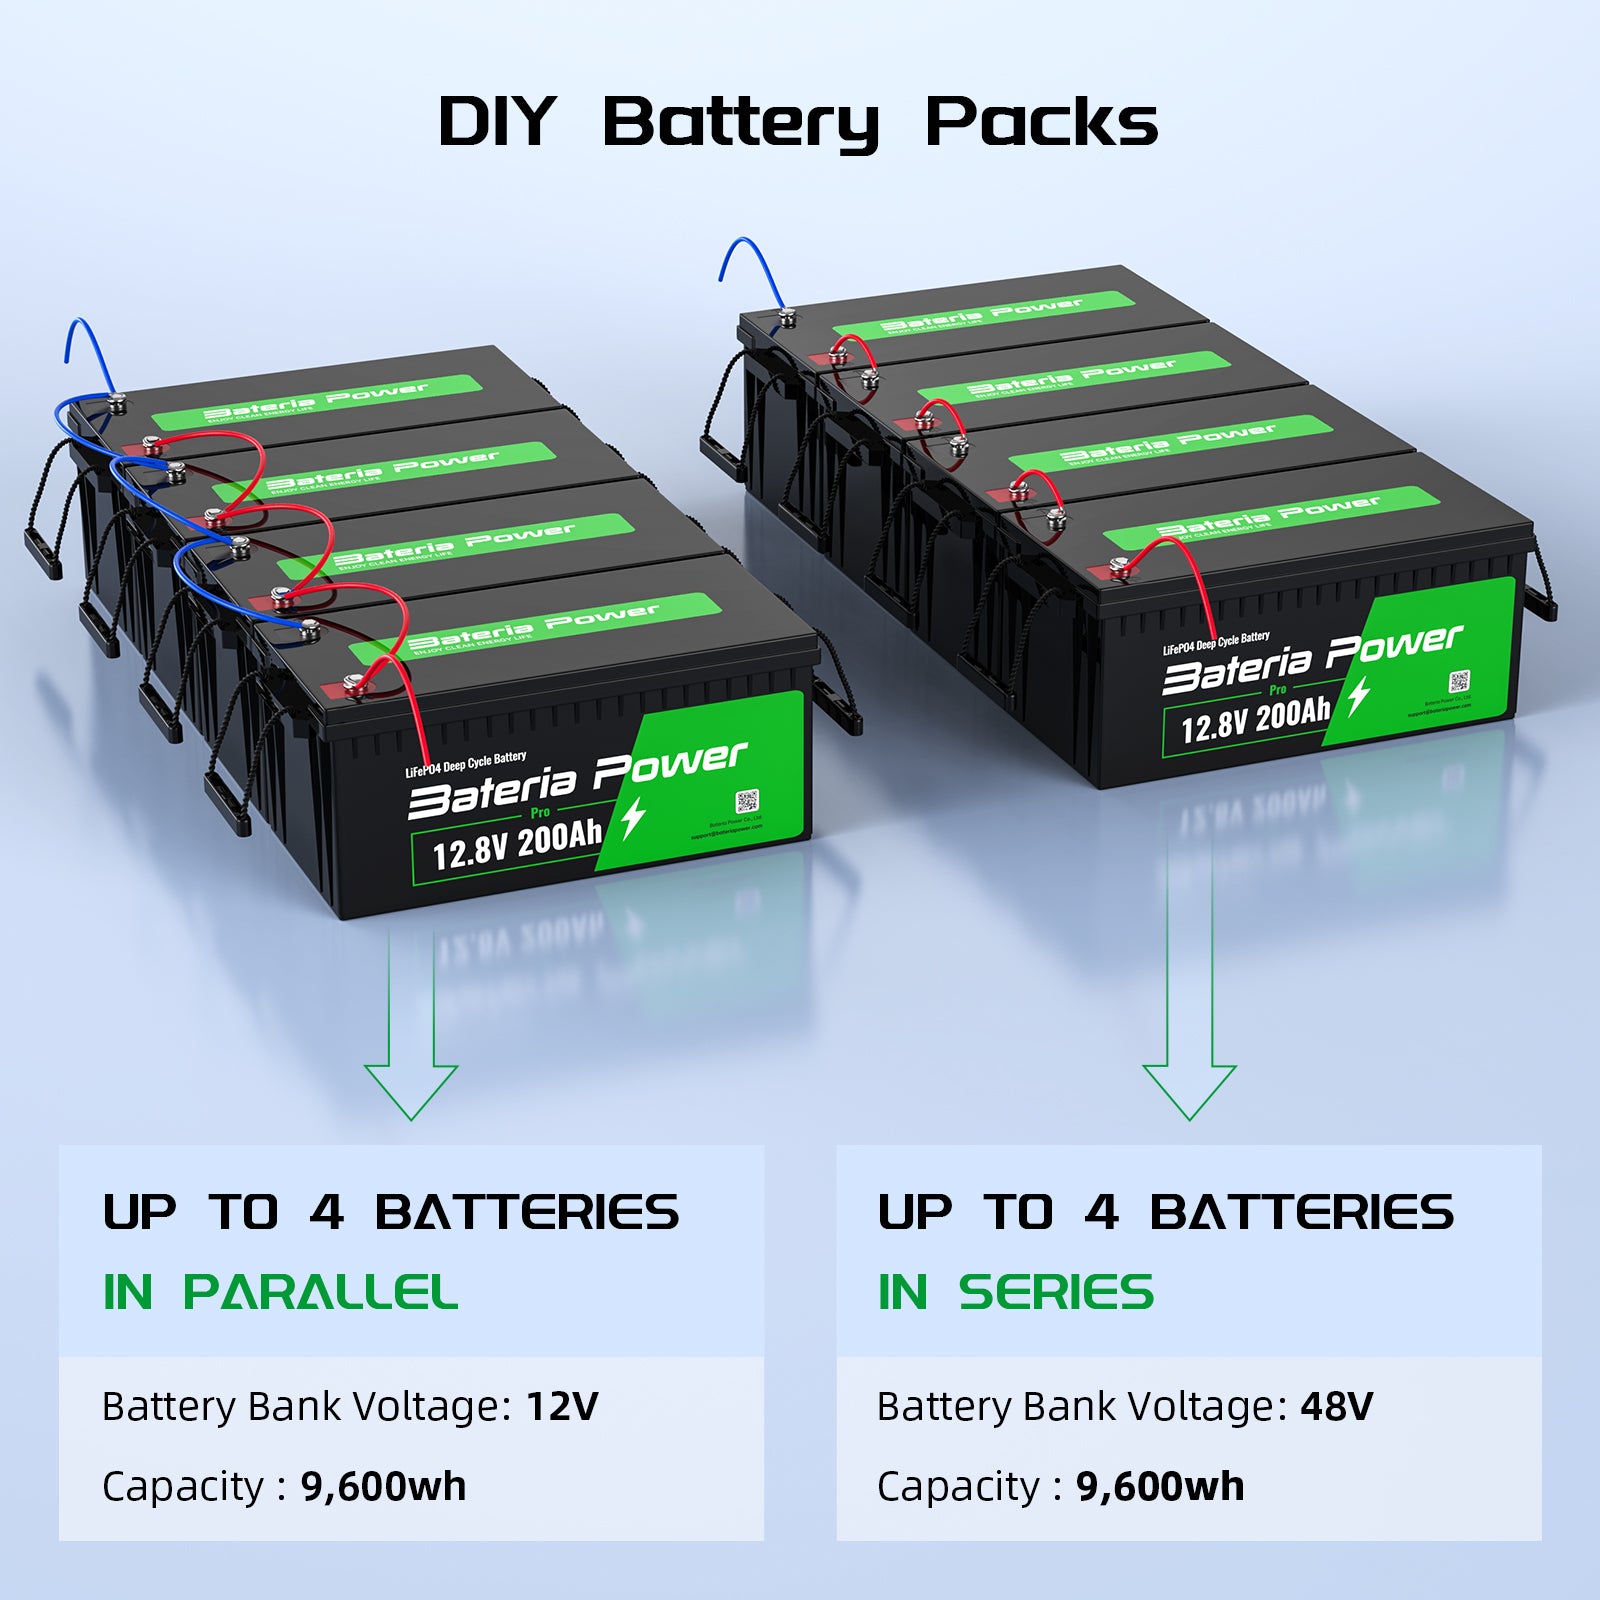 12V 200Ah LiFePO4 Battery – bateriapower